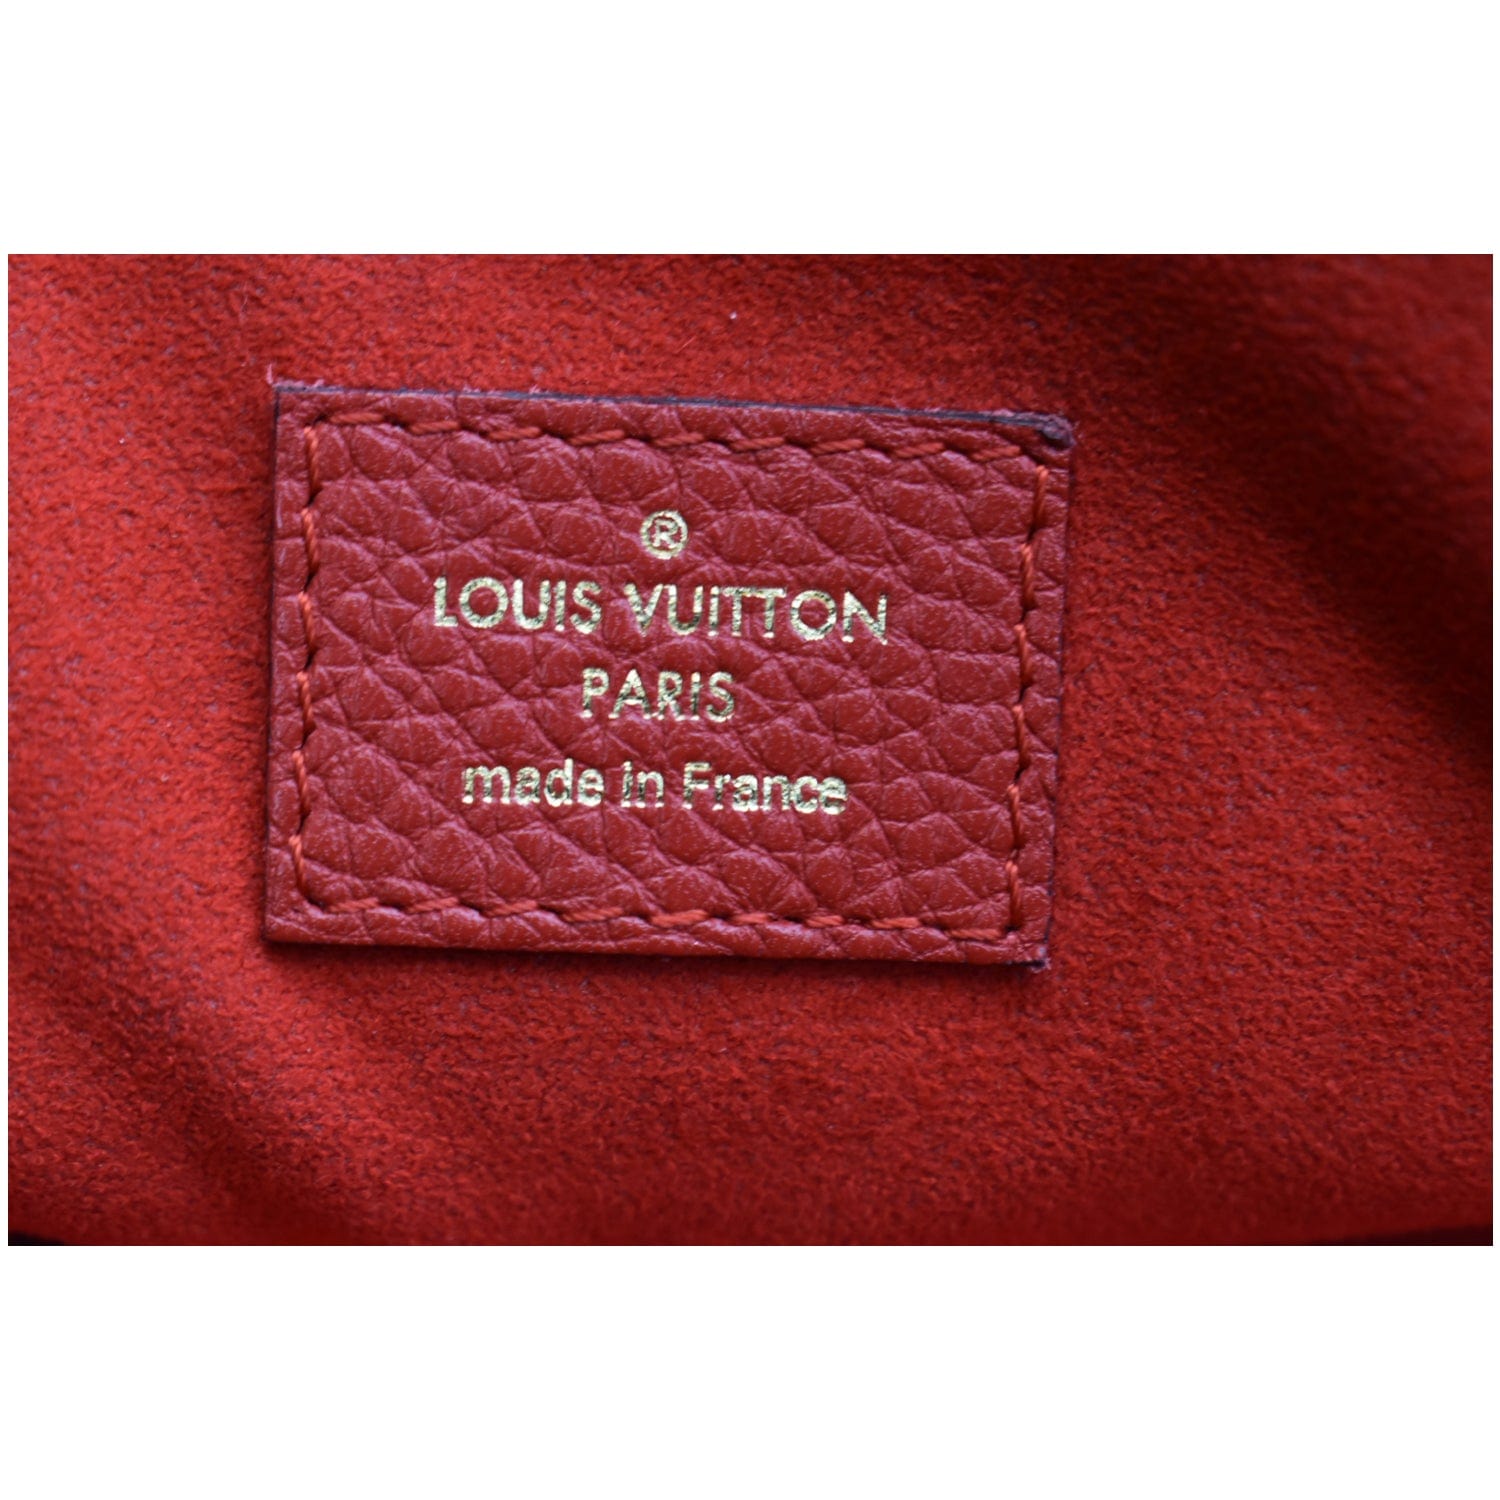 TARJETERO LOUIS VUITTON REVERSO - Detail shot of Wests red Louis